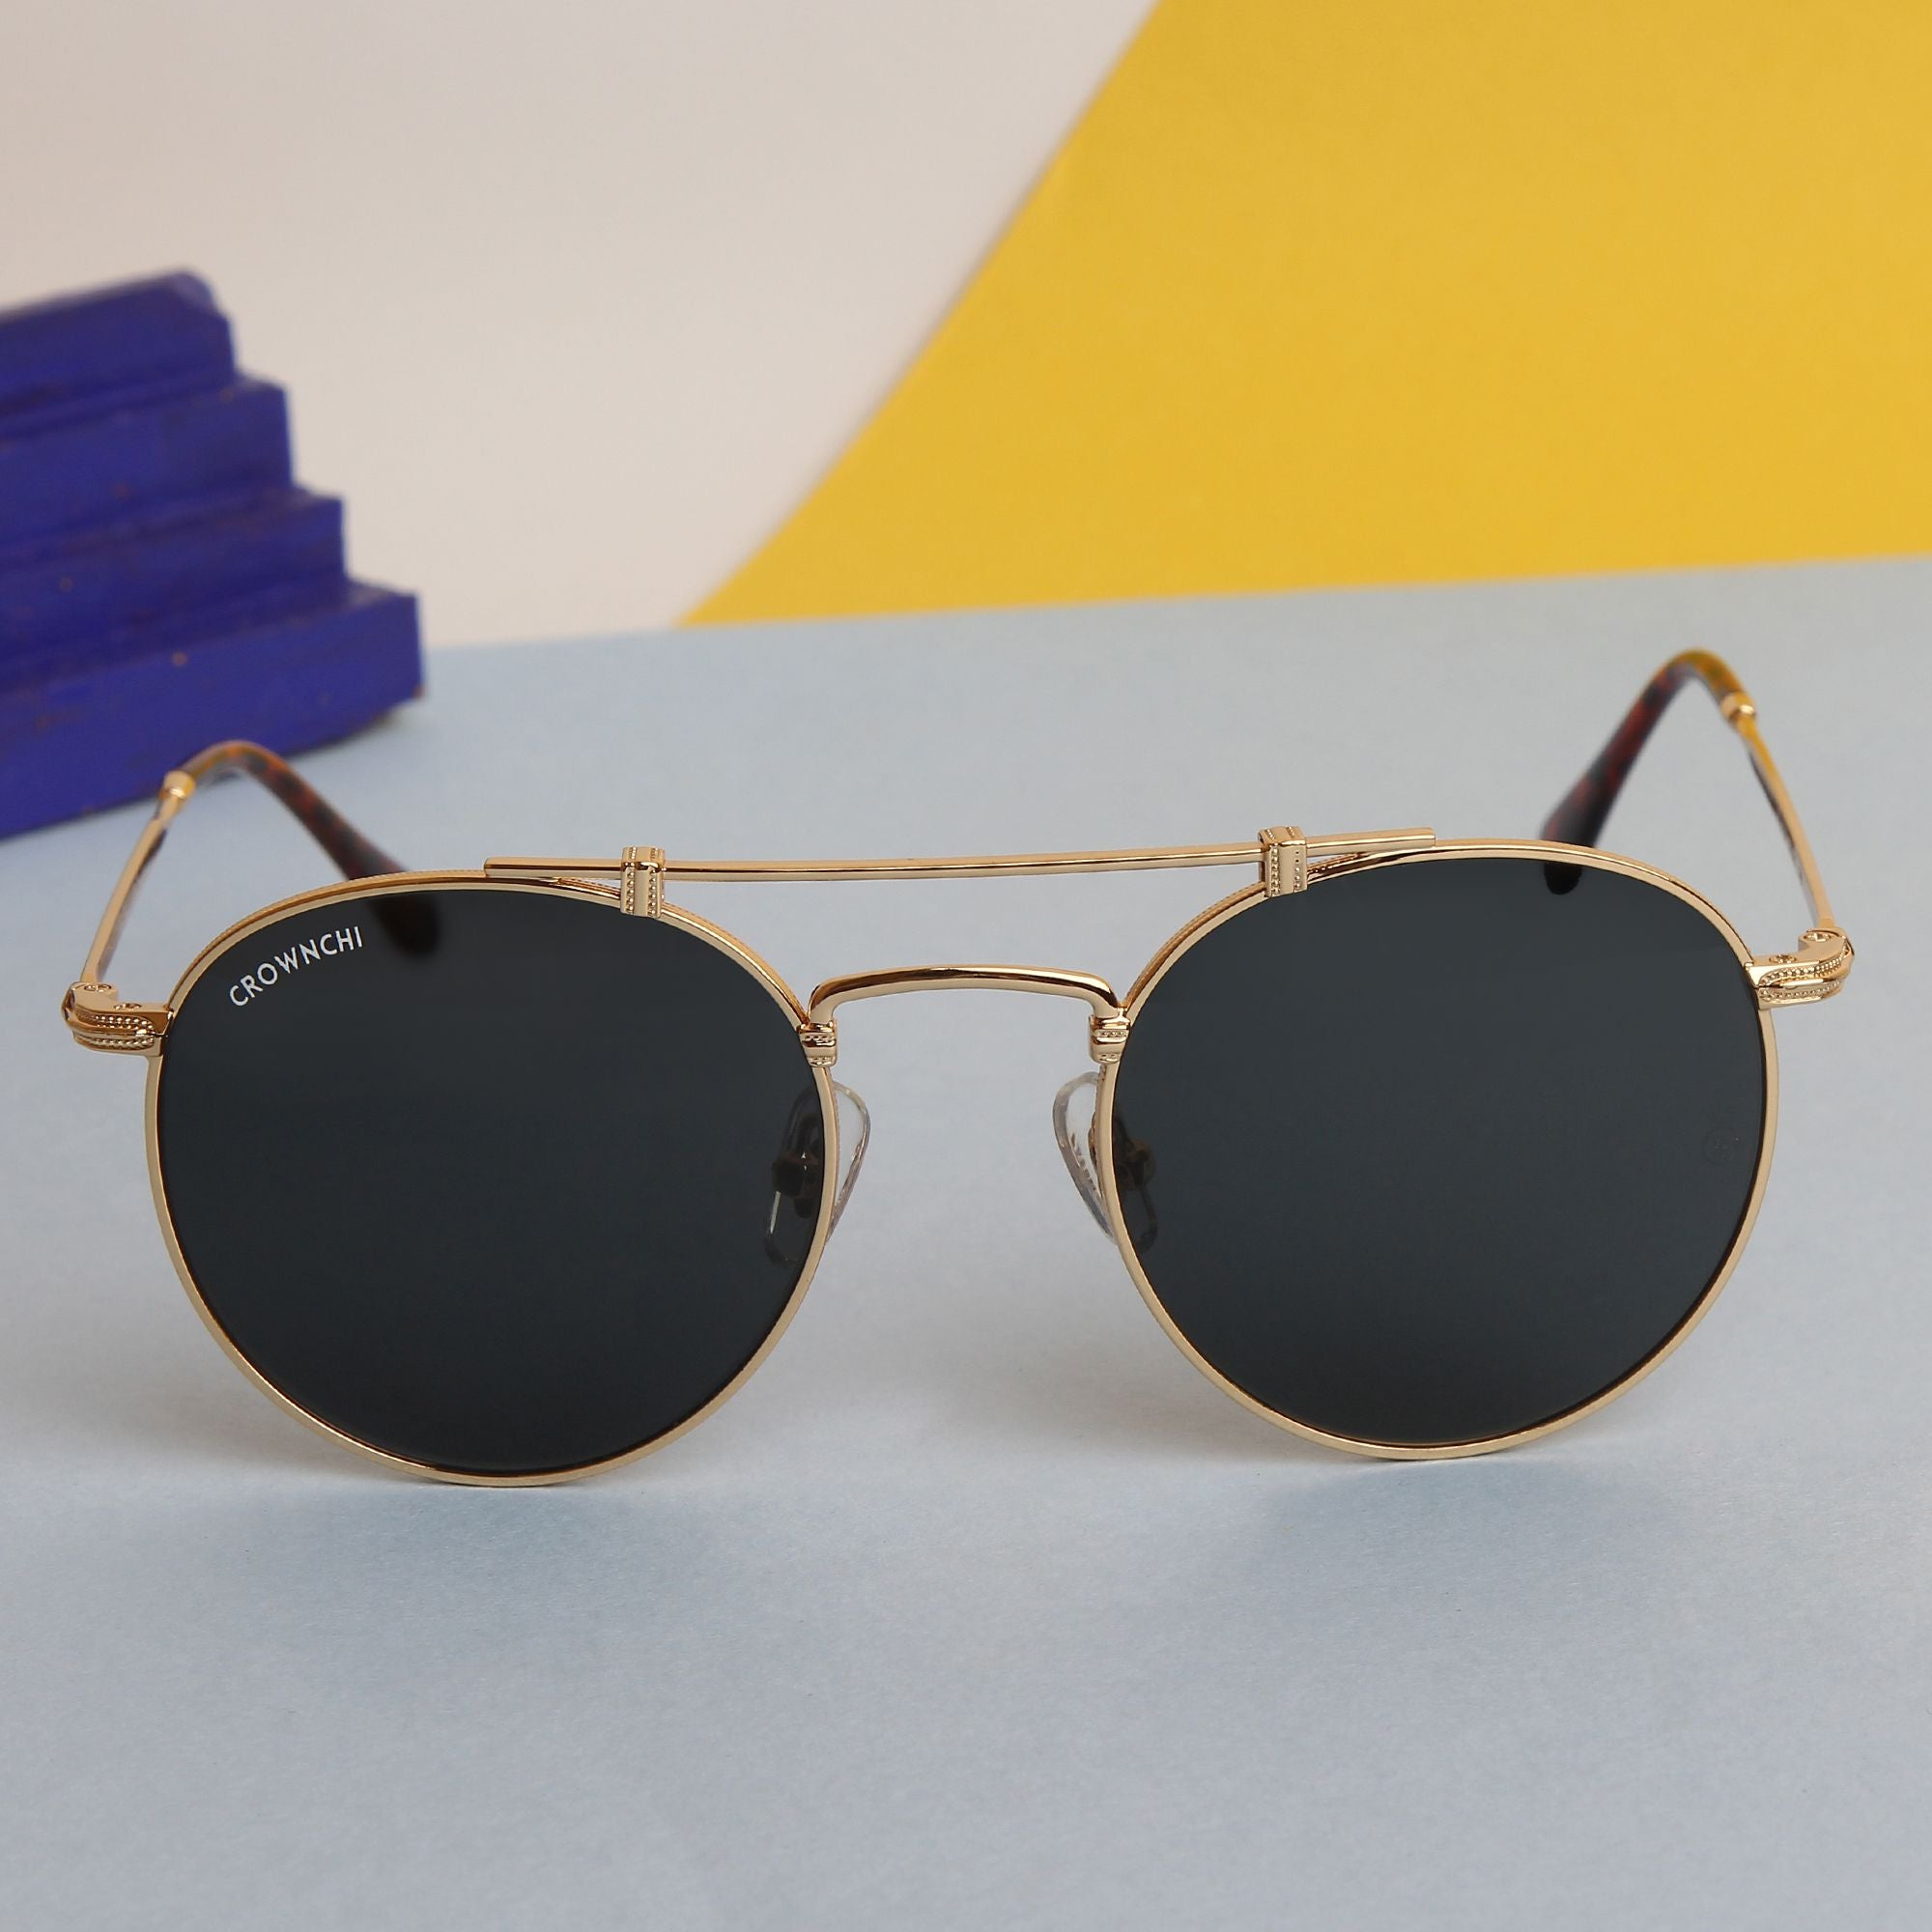 Tokyo Gold Black Upper Bridge Round Edition Sunglasses